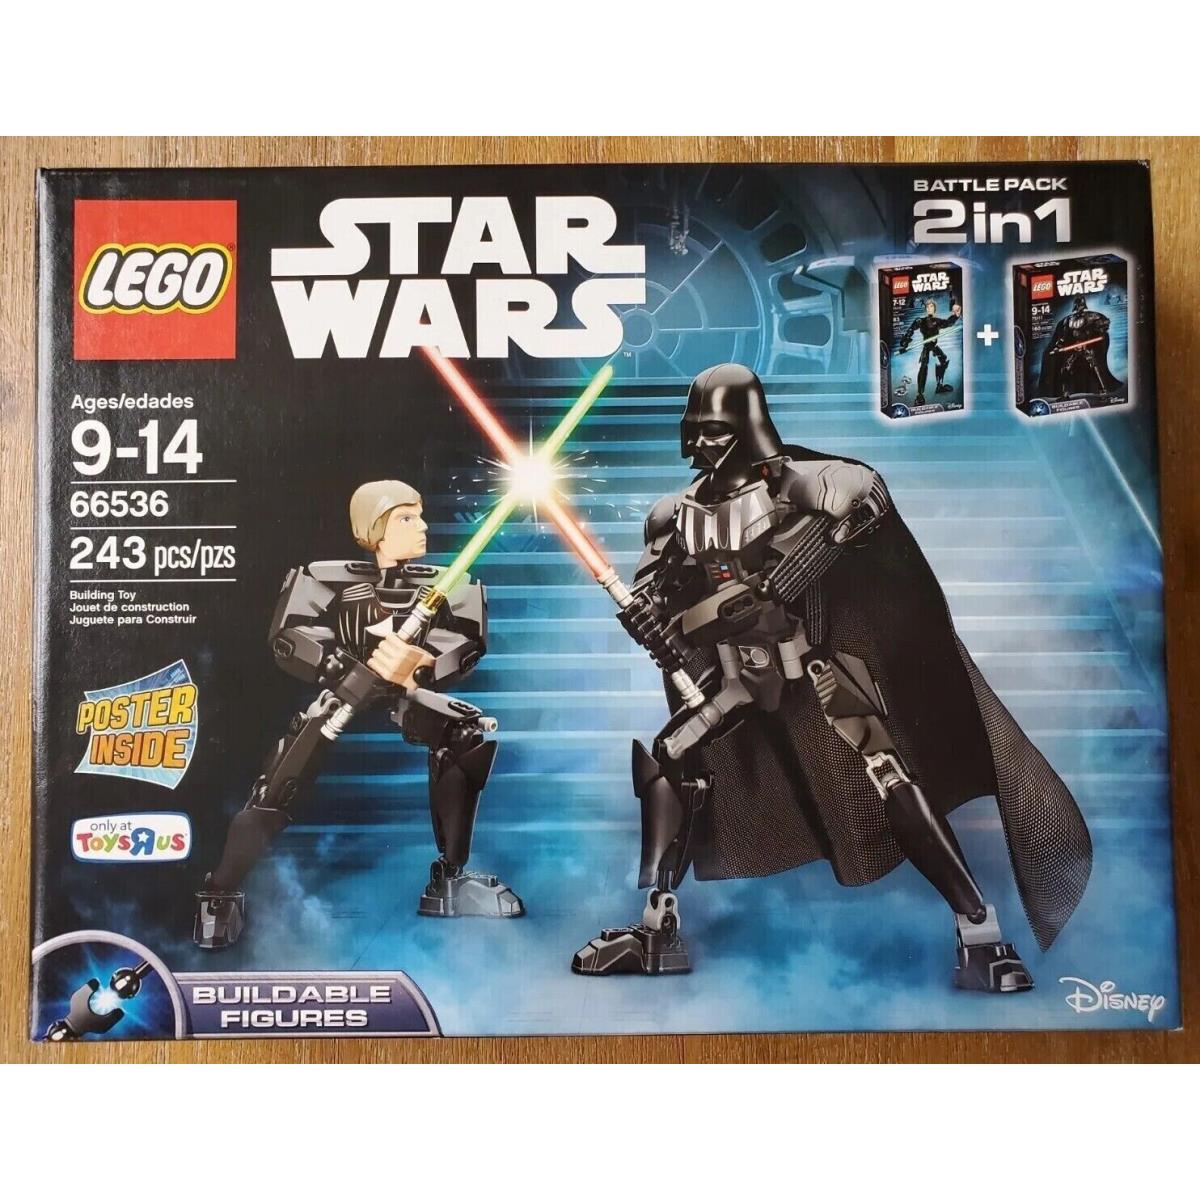 Lego 66536 Star Wars Darth Vader Vs Luke Skywalker Battle Pack 2 in 1